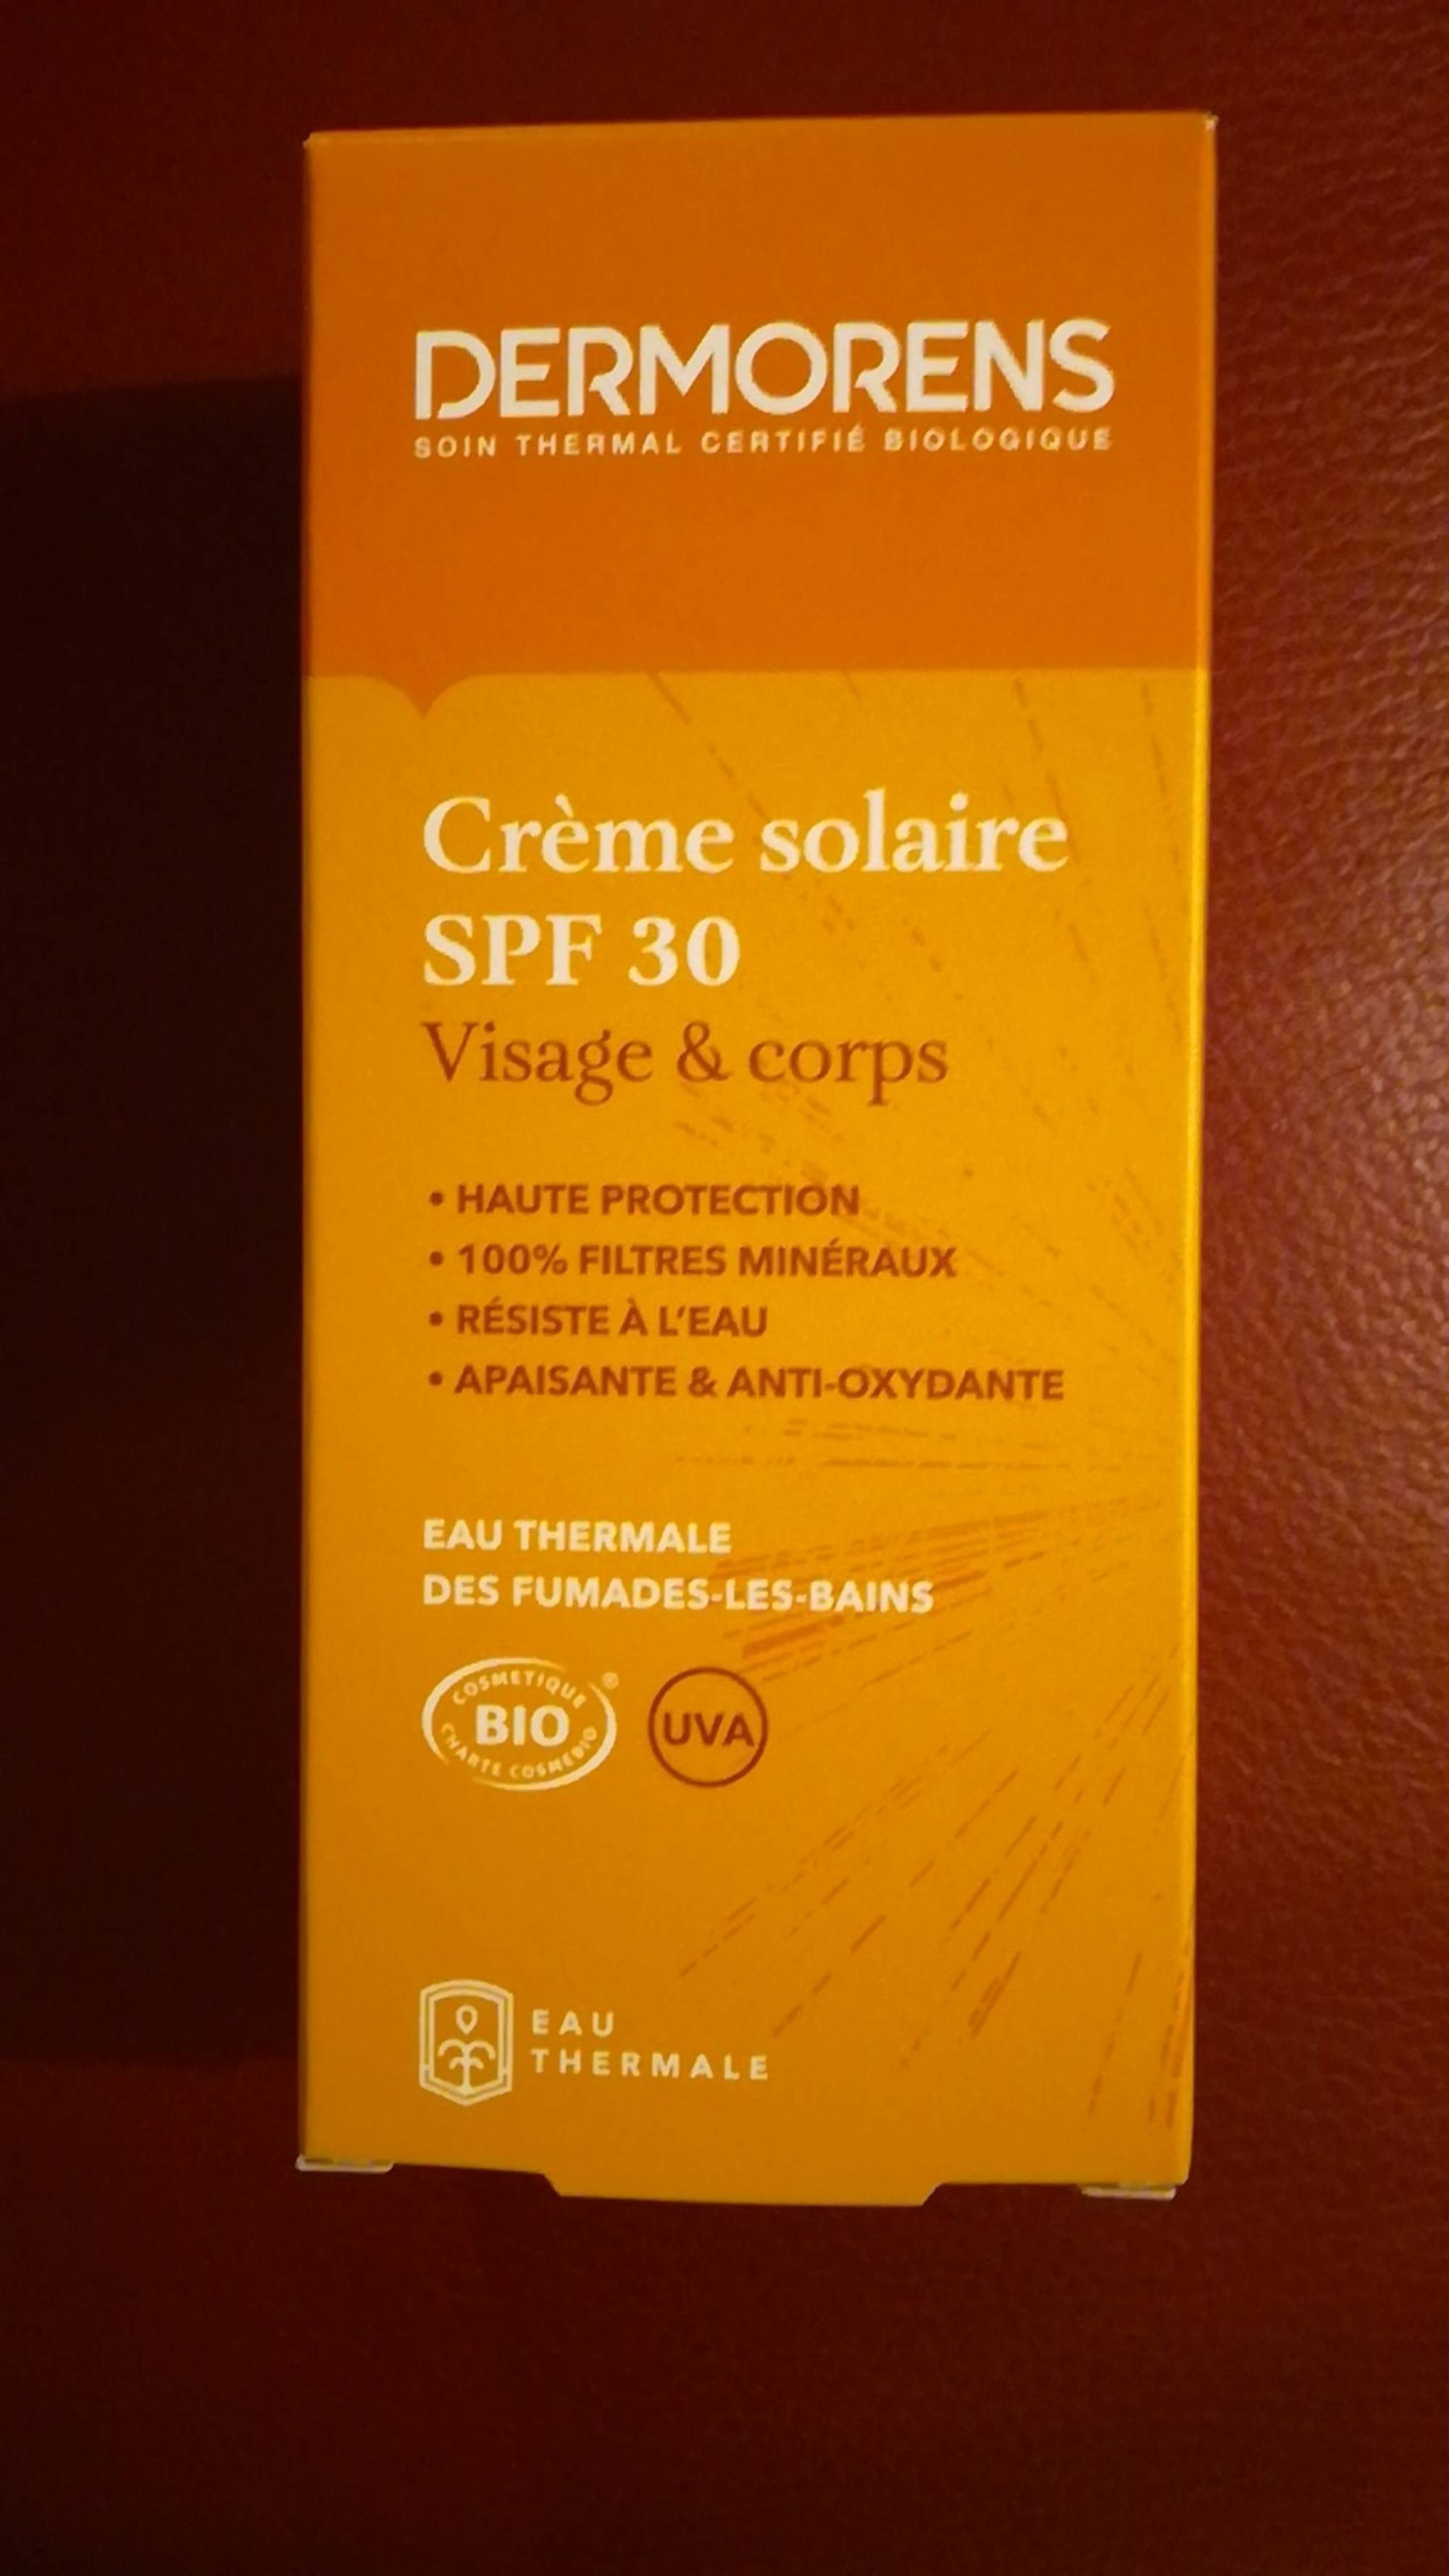 DERMORENS - Crème solaire SPF 30 - Visage & corps